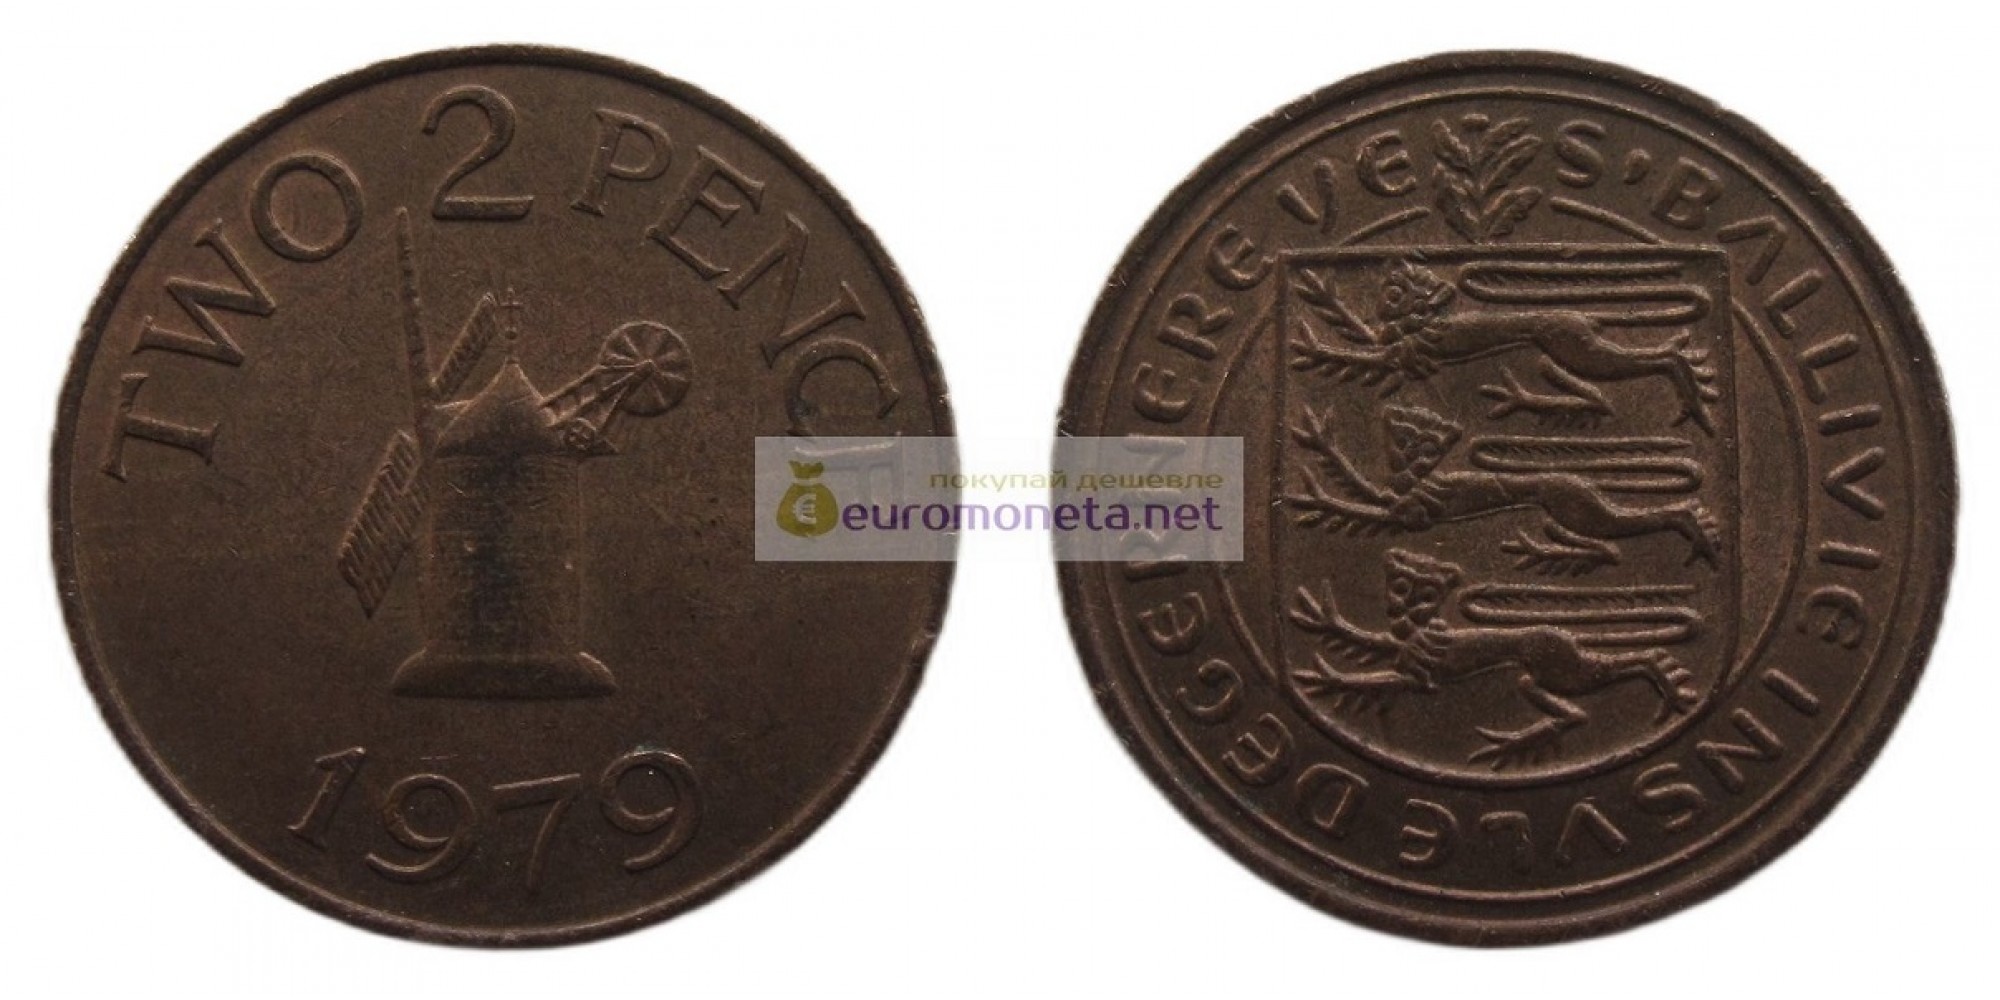 Гернси (Гернсийский фунт (десятичный)) 2 пенса 1979 год. Королева Елизавета II